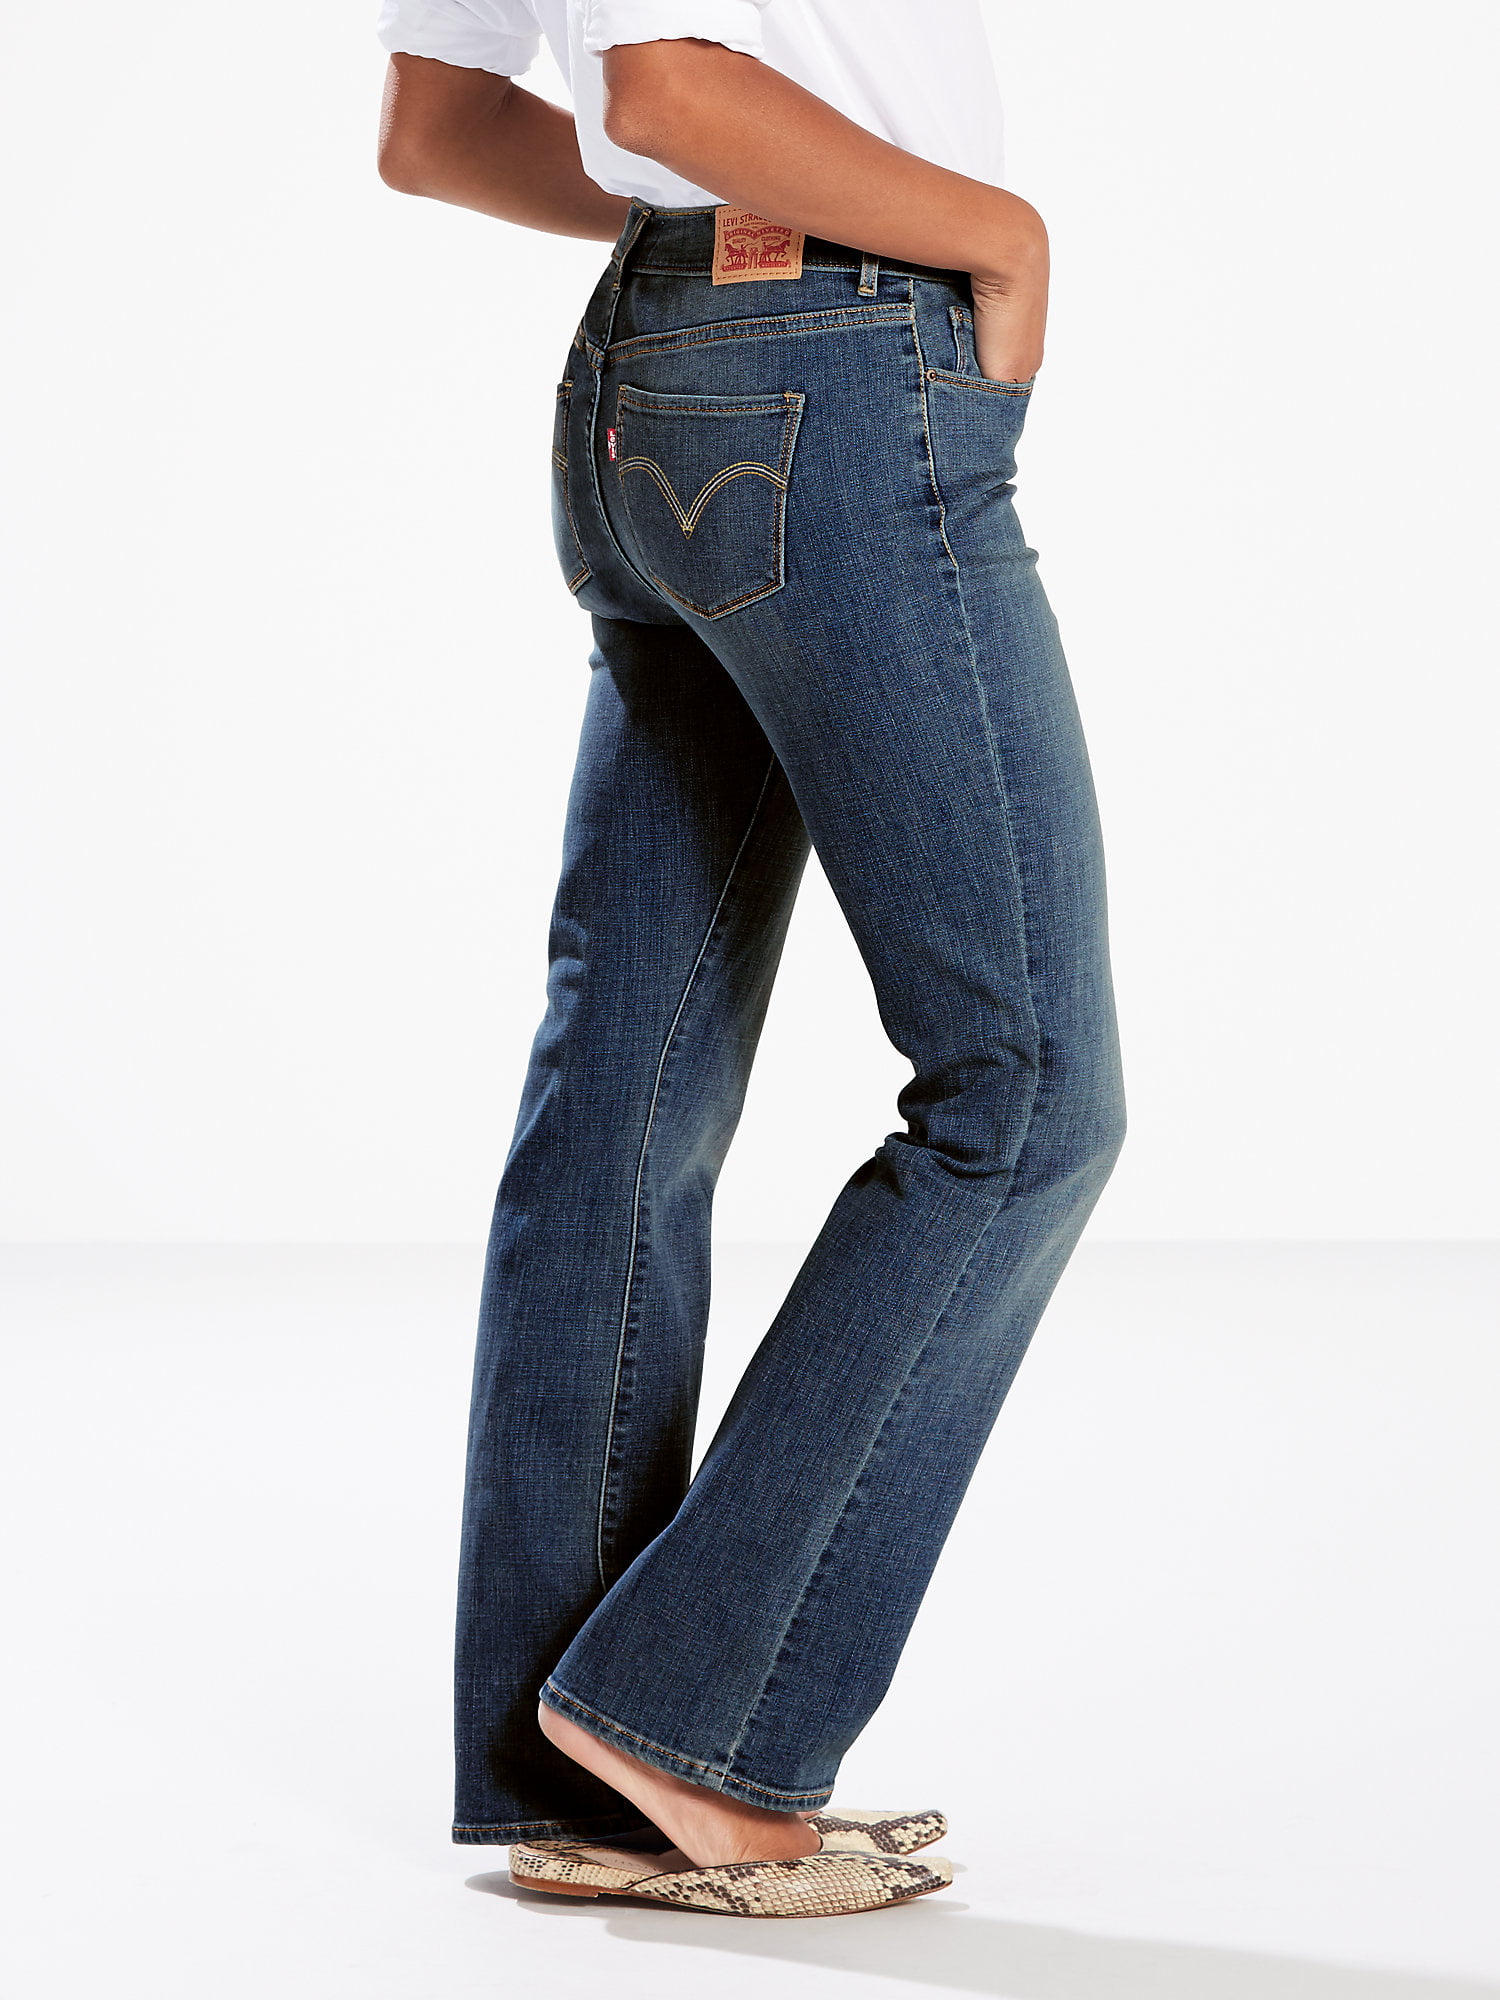 Levi's Original Red Tab Women's Classic Bootcut Jeans - Walmart.com